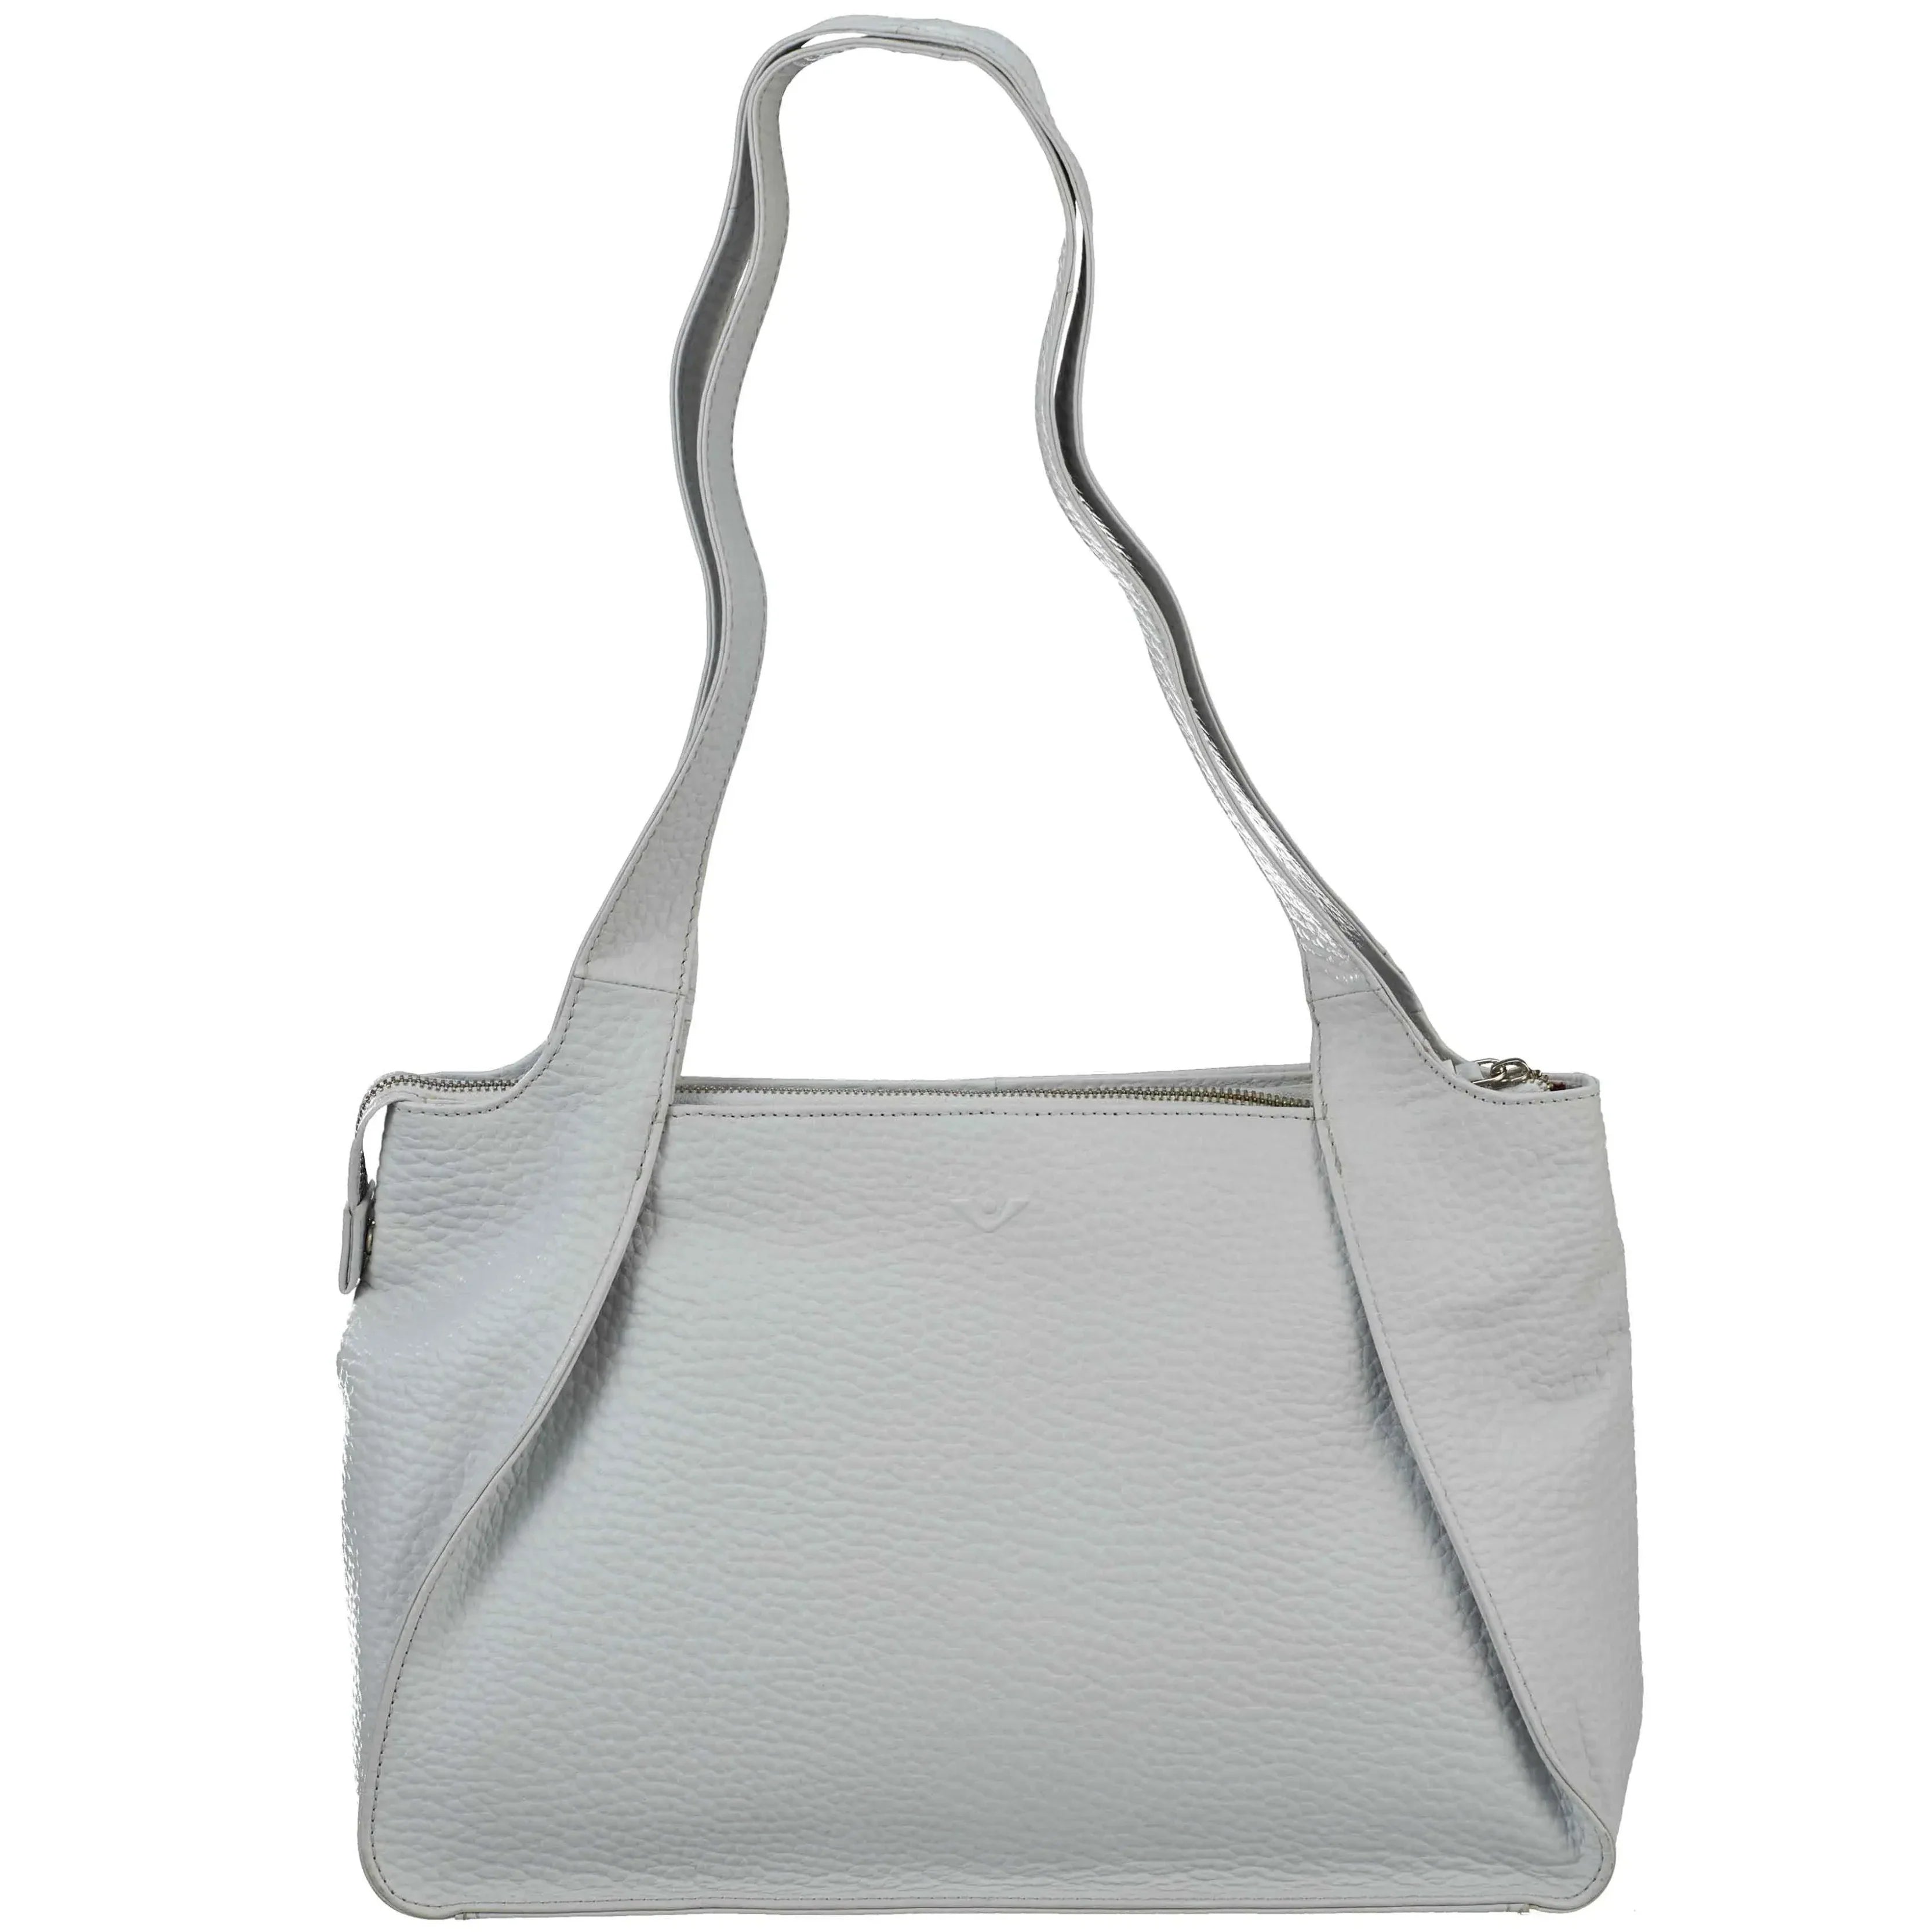 VOi-Design Hirsch Aime shoulder bag 39 cm - Platinum